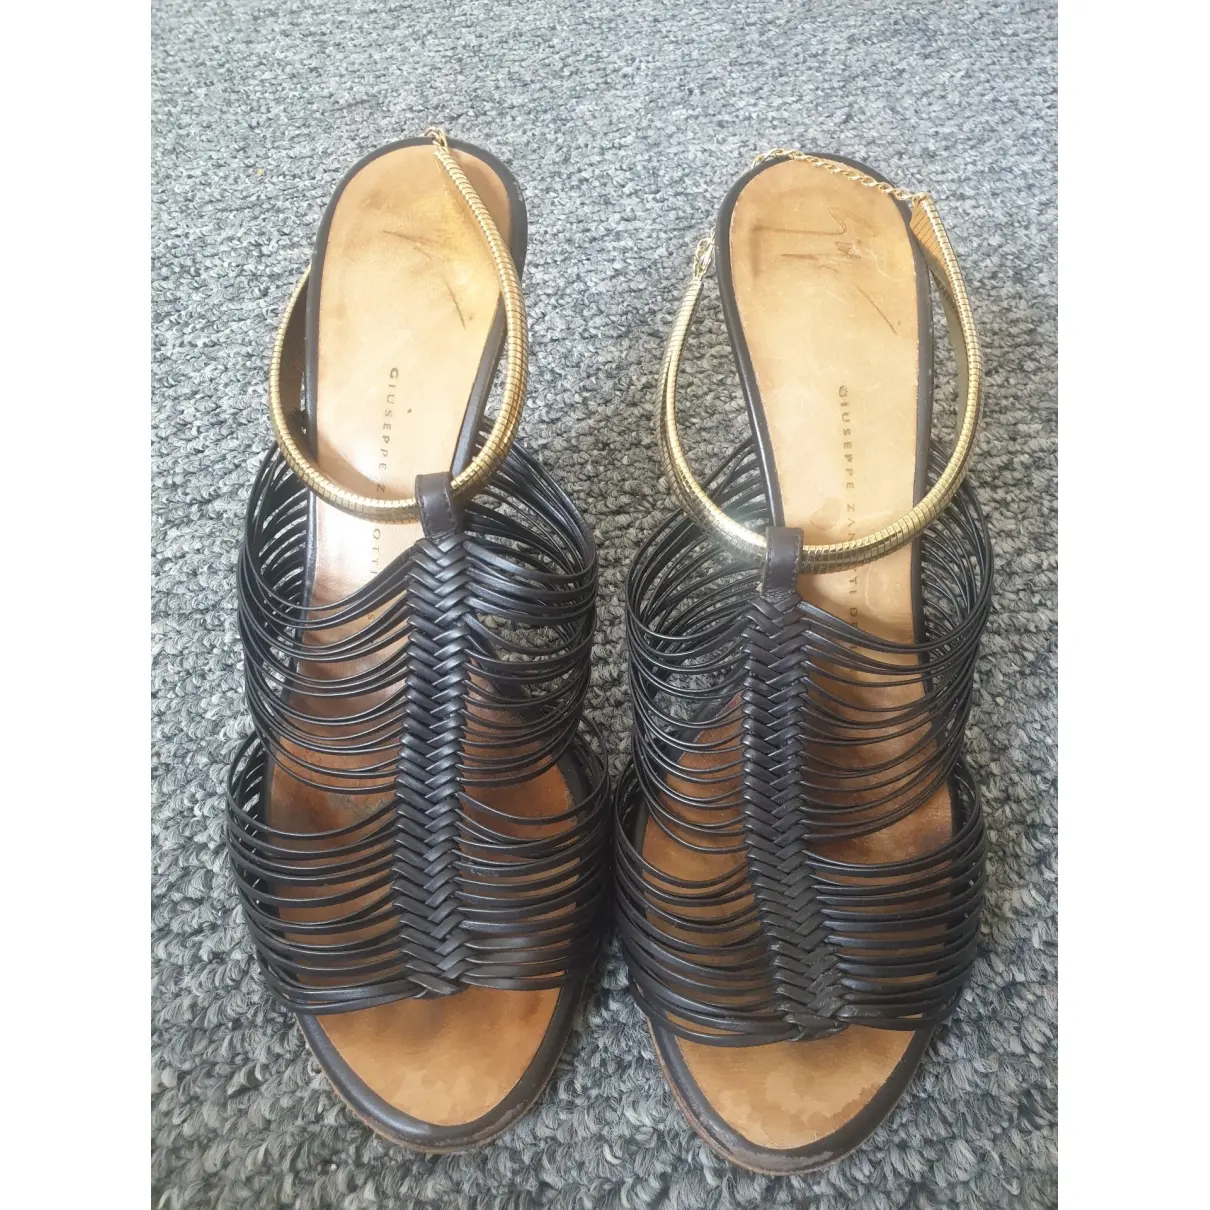 Giuseppe Zanotti Leather sandals for sale